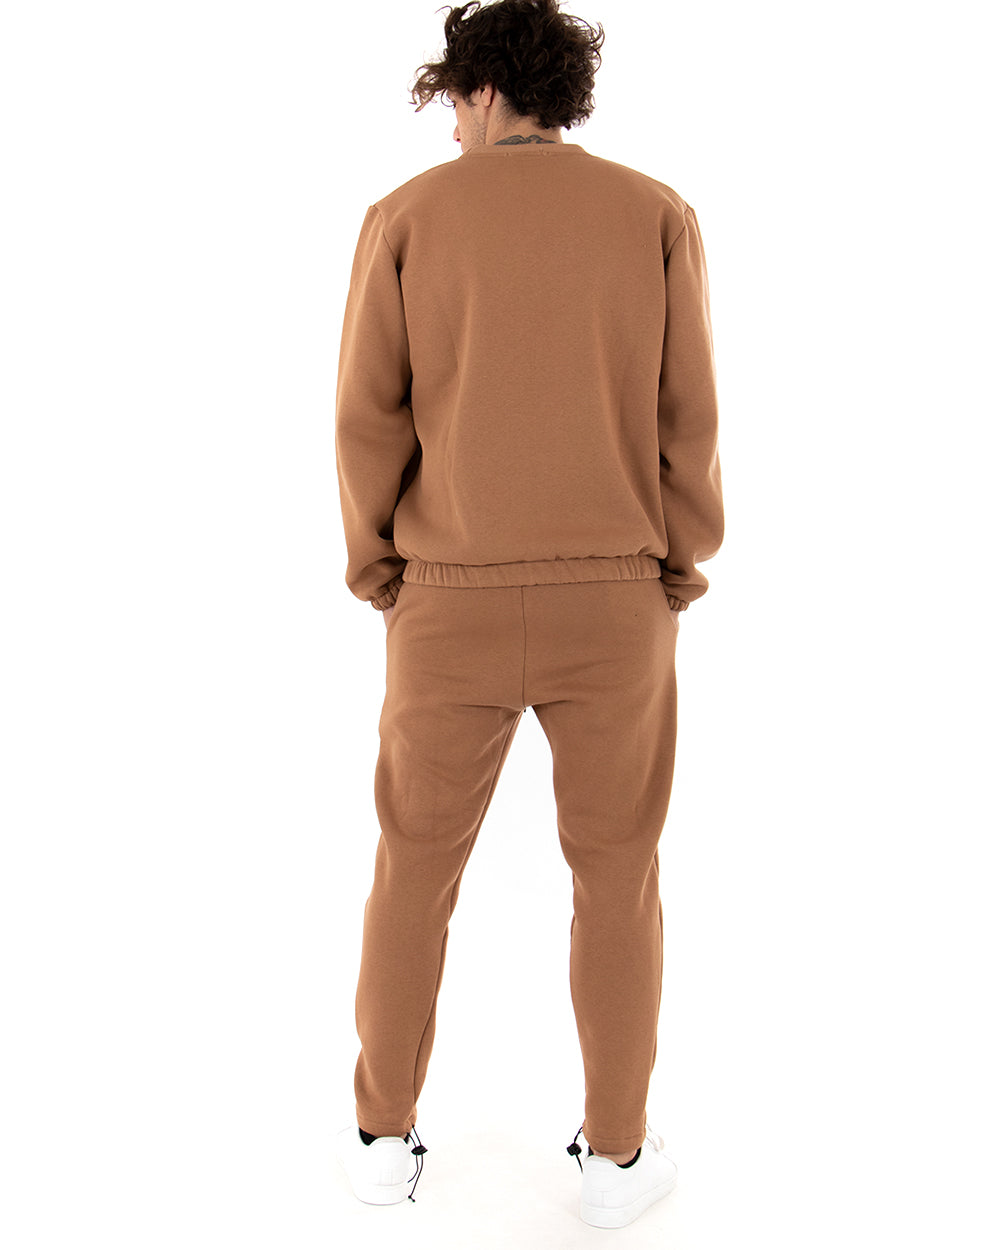 Men's Crew Neck Sweatshirt Basic Sweatshirt Solid Color Camel Regular Fit GIOSAL-F2876A